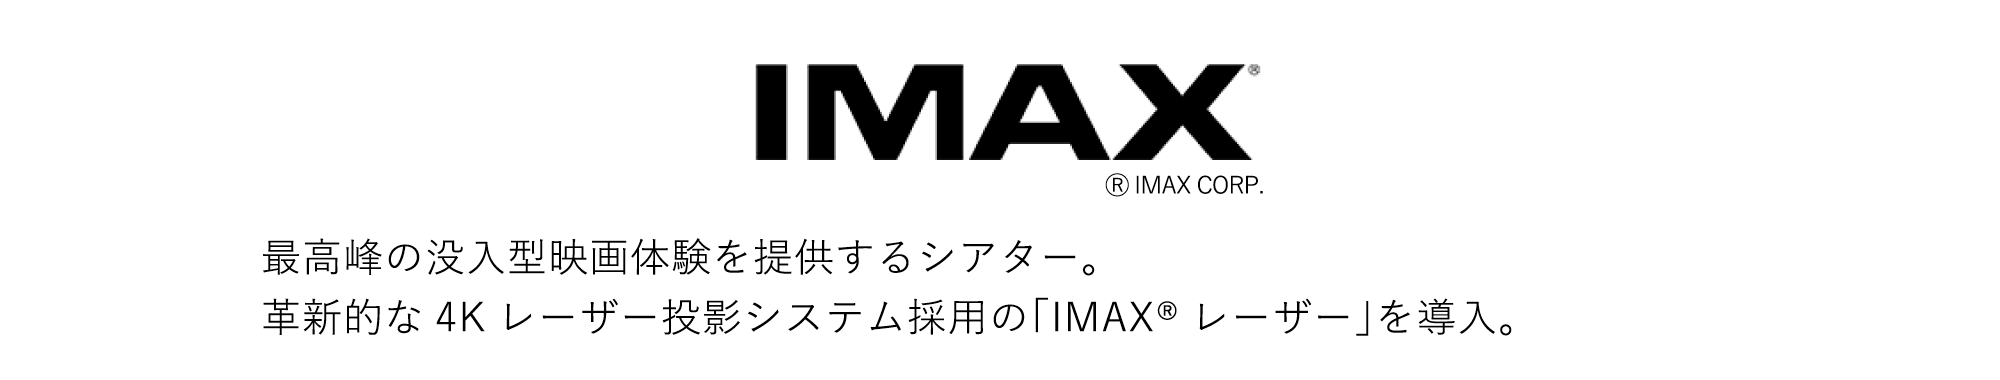 IMAX 最高峰の没入型映画体験を提供するシアター。革新的な4Kレーザー投影システム採用の「IMAXレーザー」を導入。